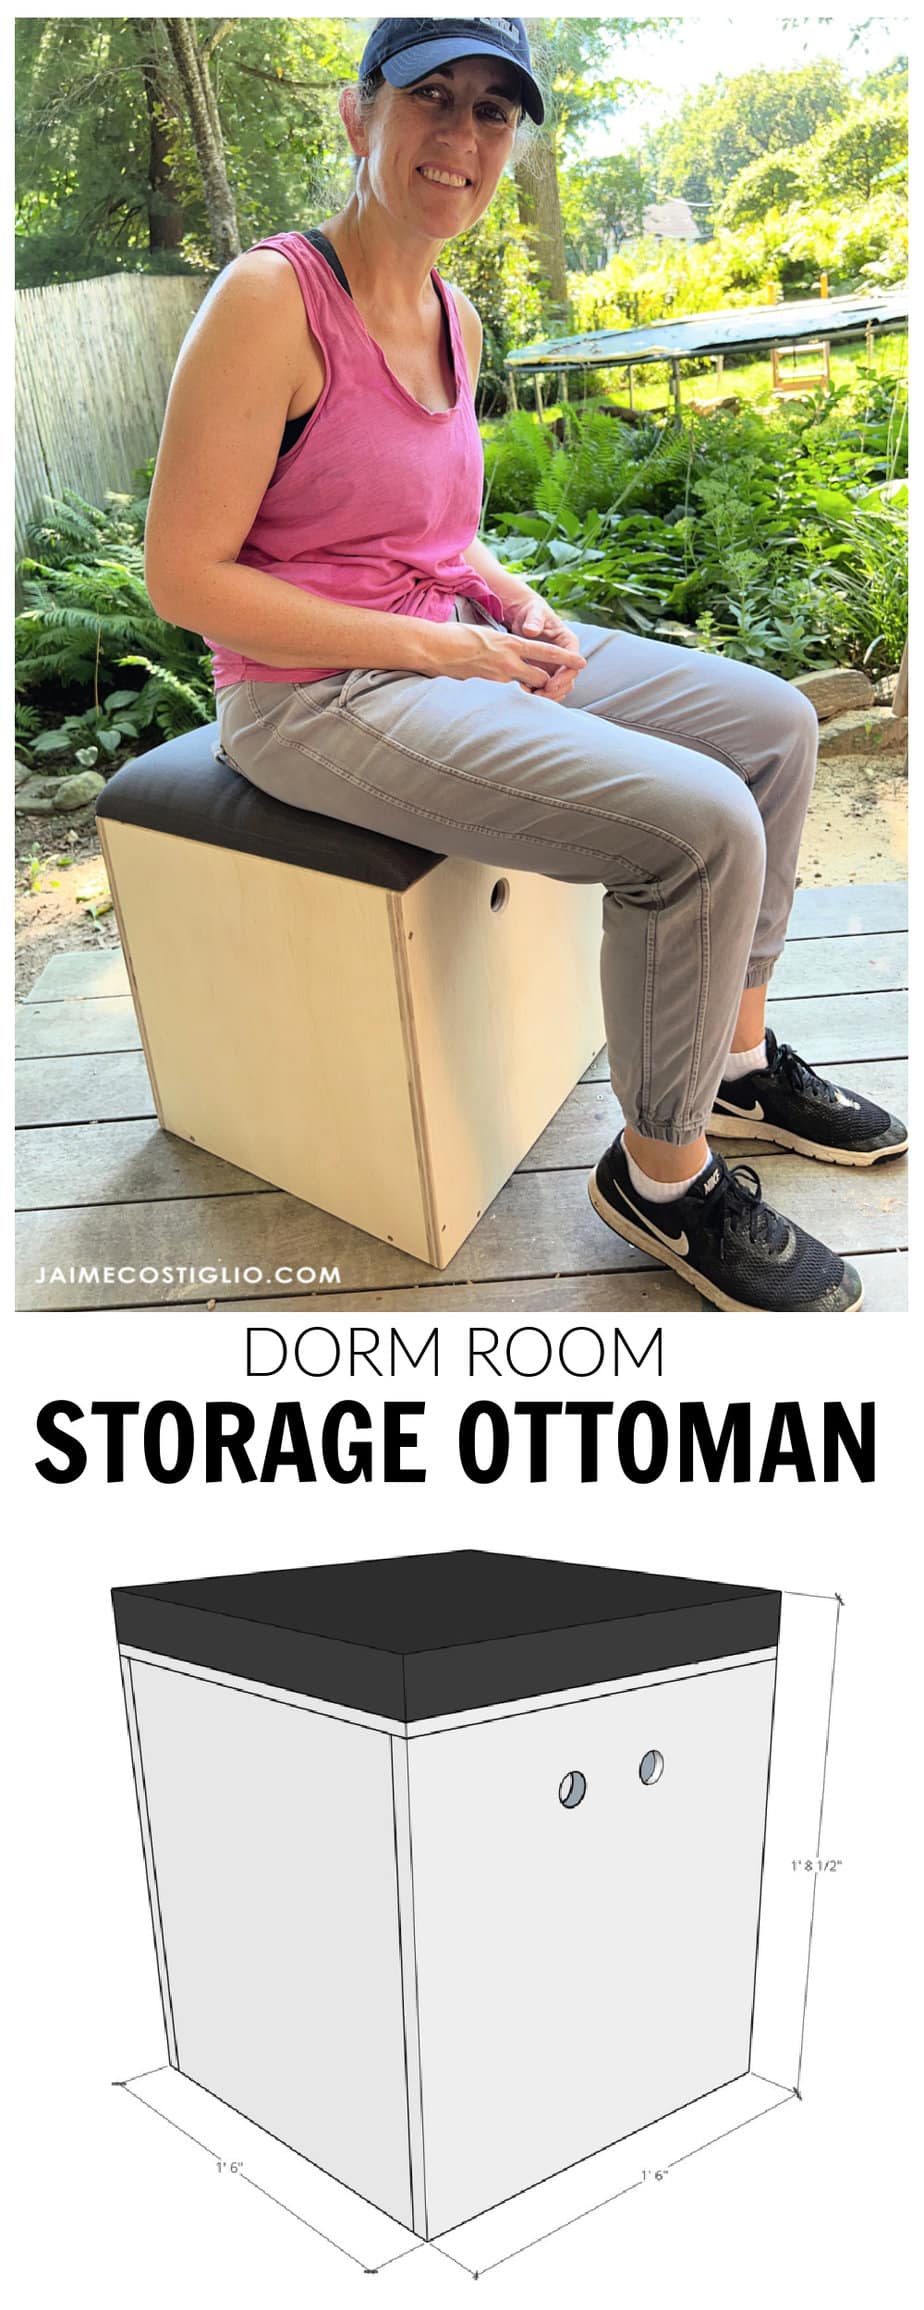 dorm room storage ottoman plans